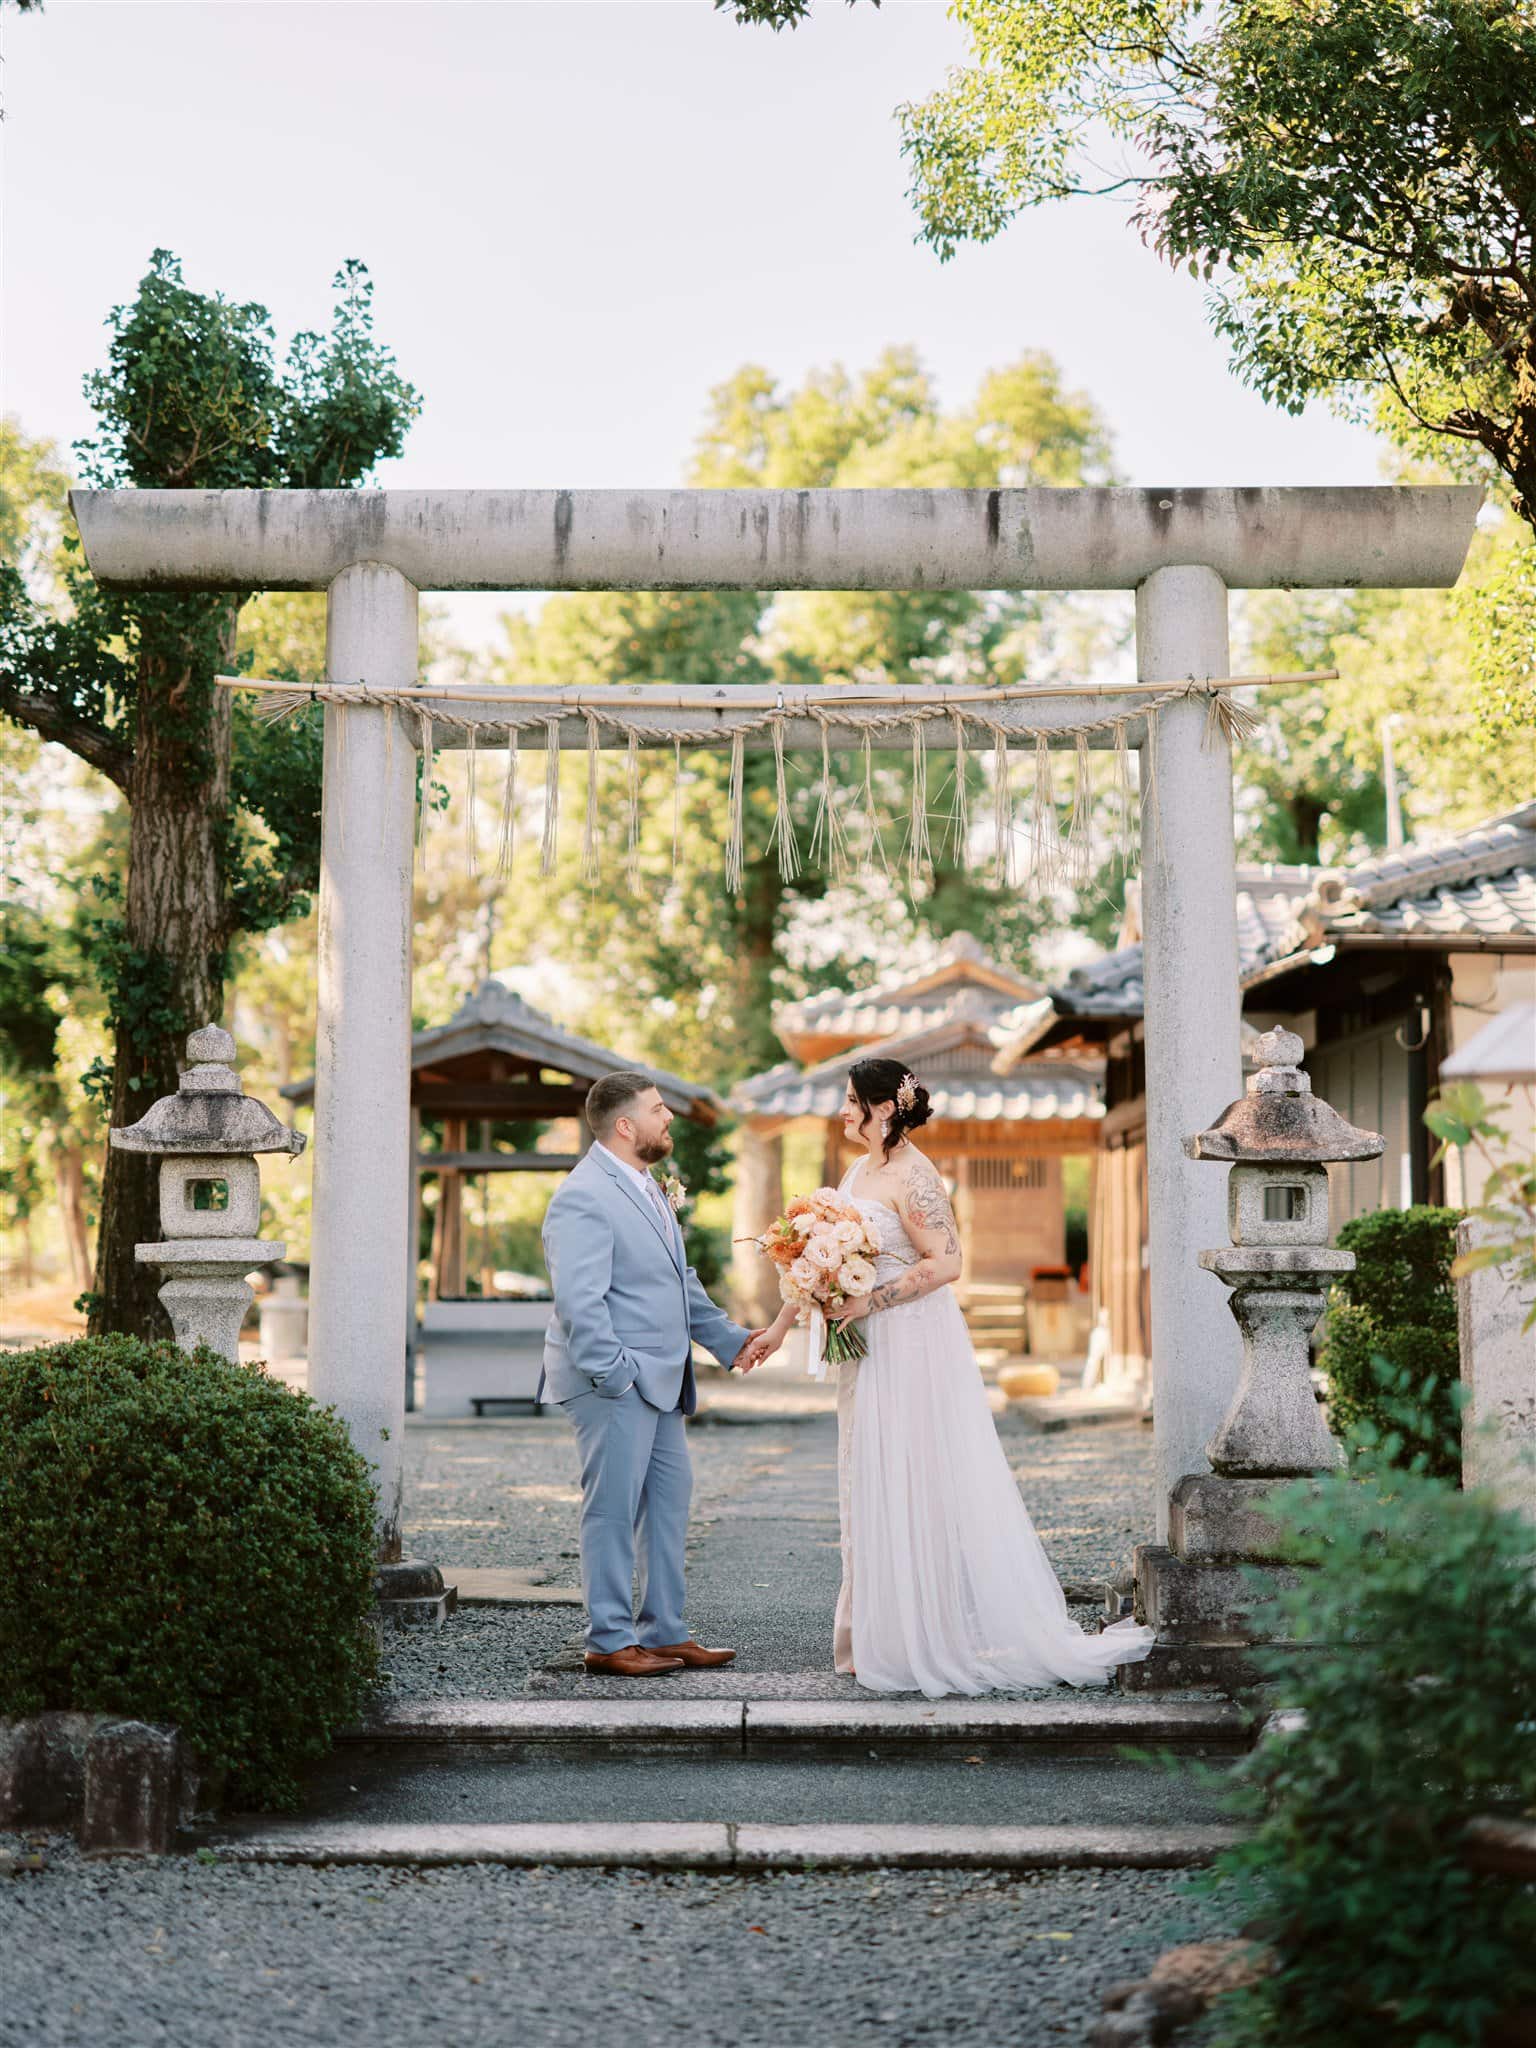 Japan Elopement Wedding Photographer, Planner & Videographer | A couple having a romantic elopement in front of a Japanese torii gate.